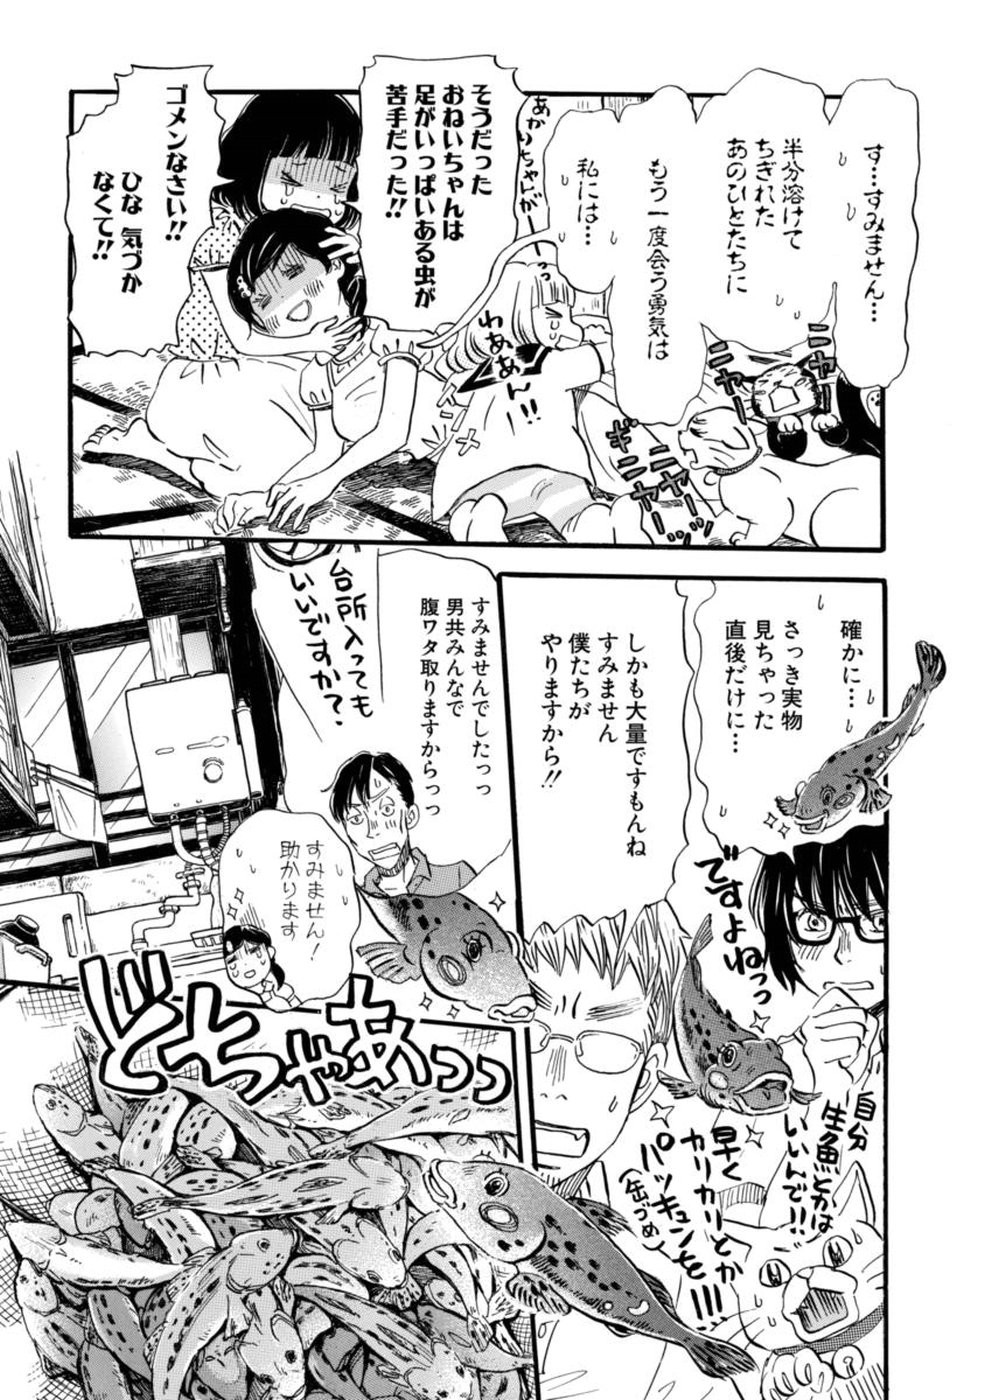 3 Gatsu no Lion - Chapter 146 - Page 4